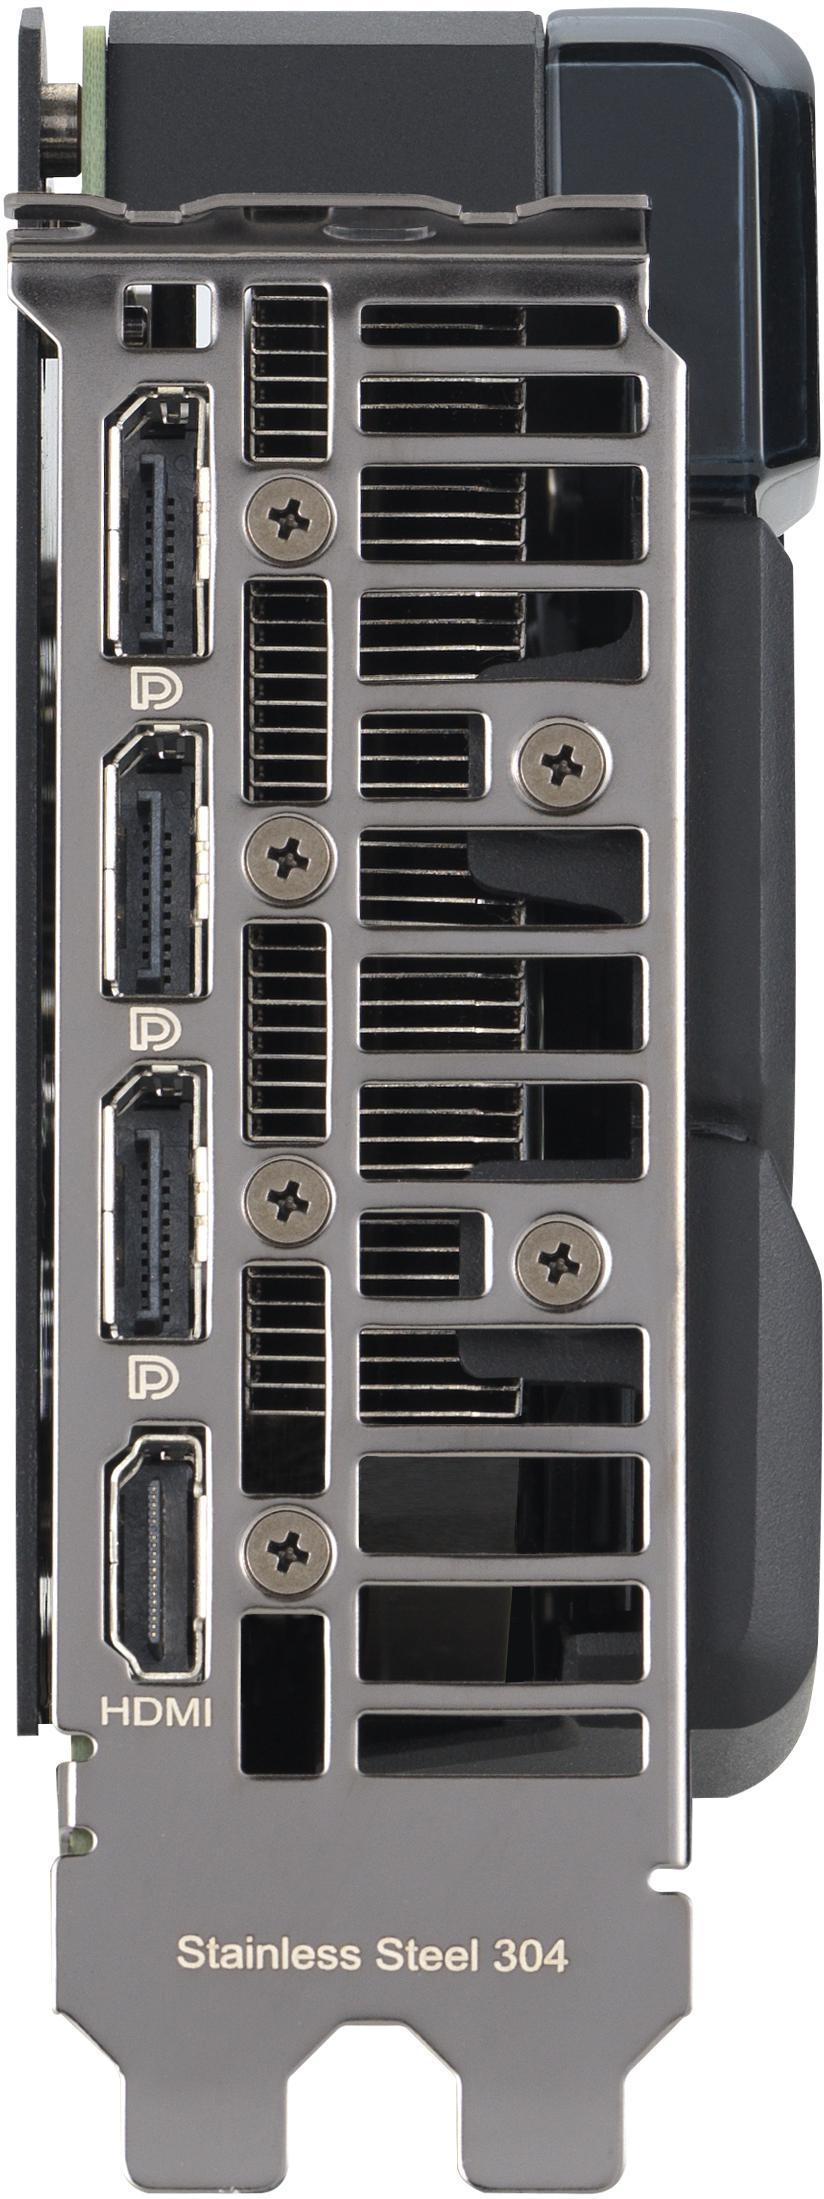  ASUS TUF Gaming GeForce RTX™ 4060 Ti OC Edition Gaming Graphics  Card (PCIe 4.0, 8GB GDDR6, DLSS 3, HDMI 2.1a, DisplayPort 1.4a) :  Electronics